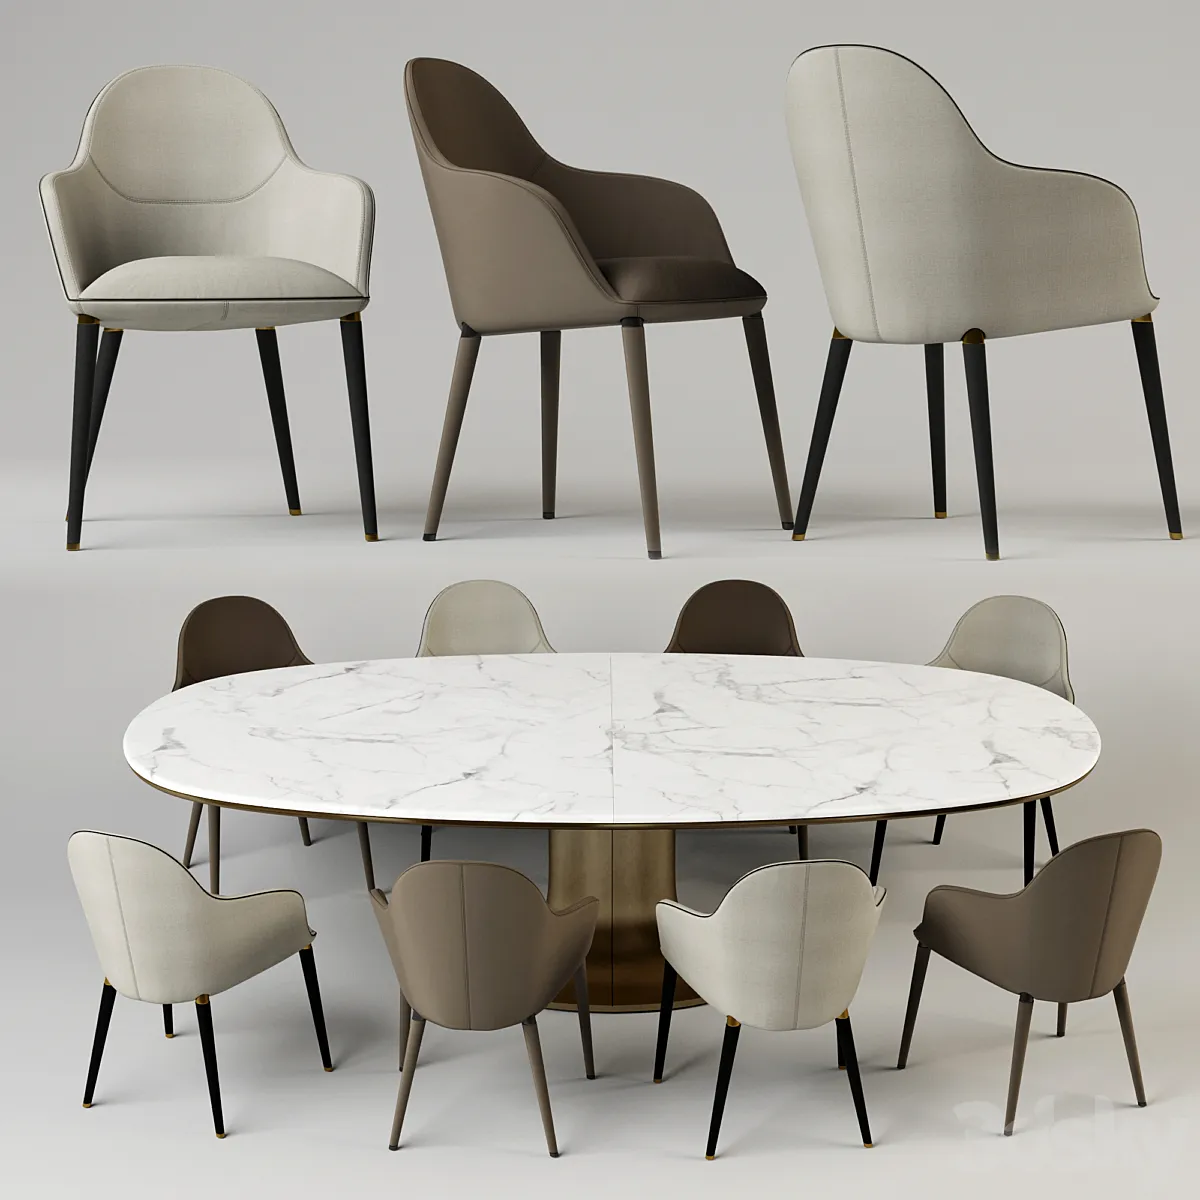 3dsky - Chairs by Giorgetti Selene Giorgetti Mizar table